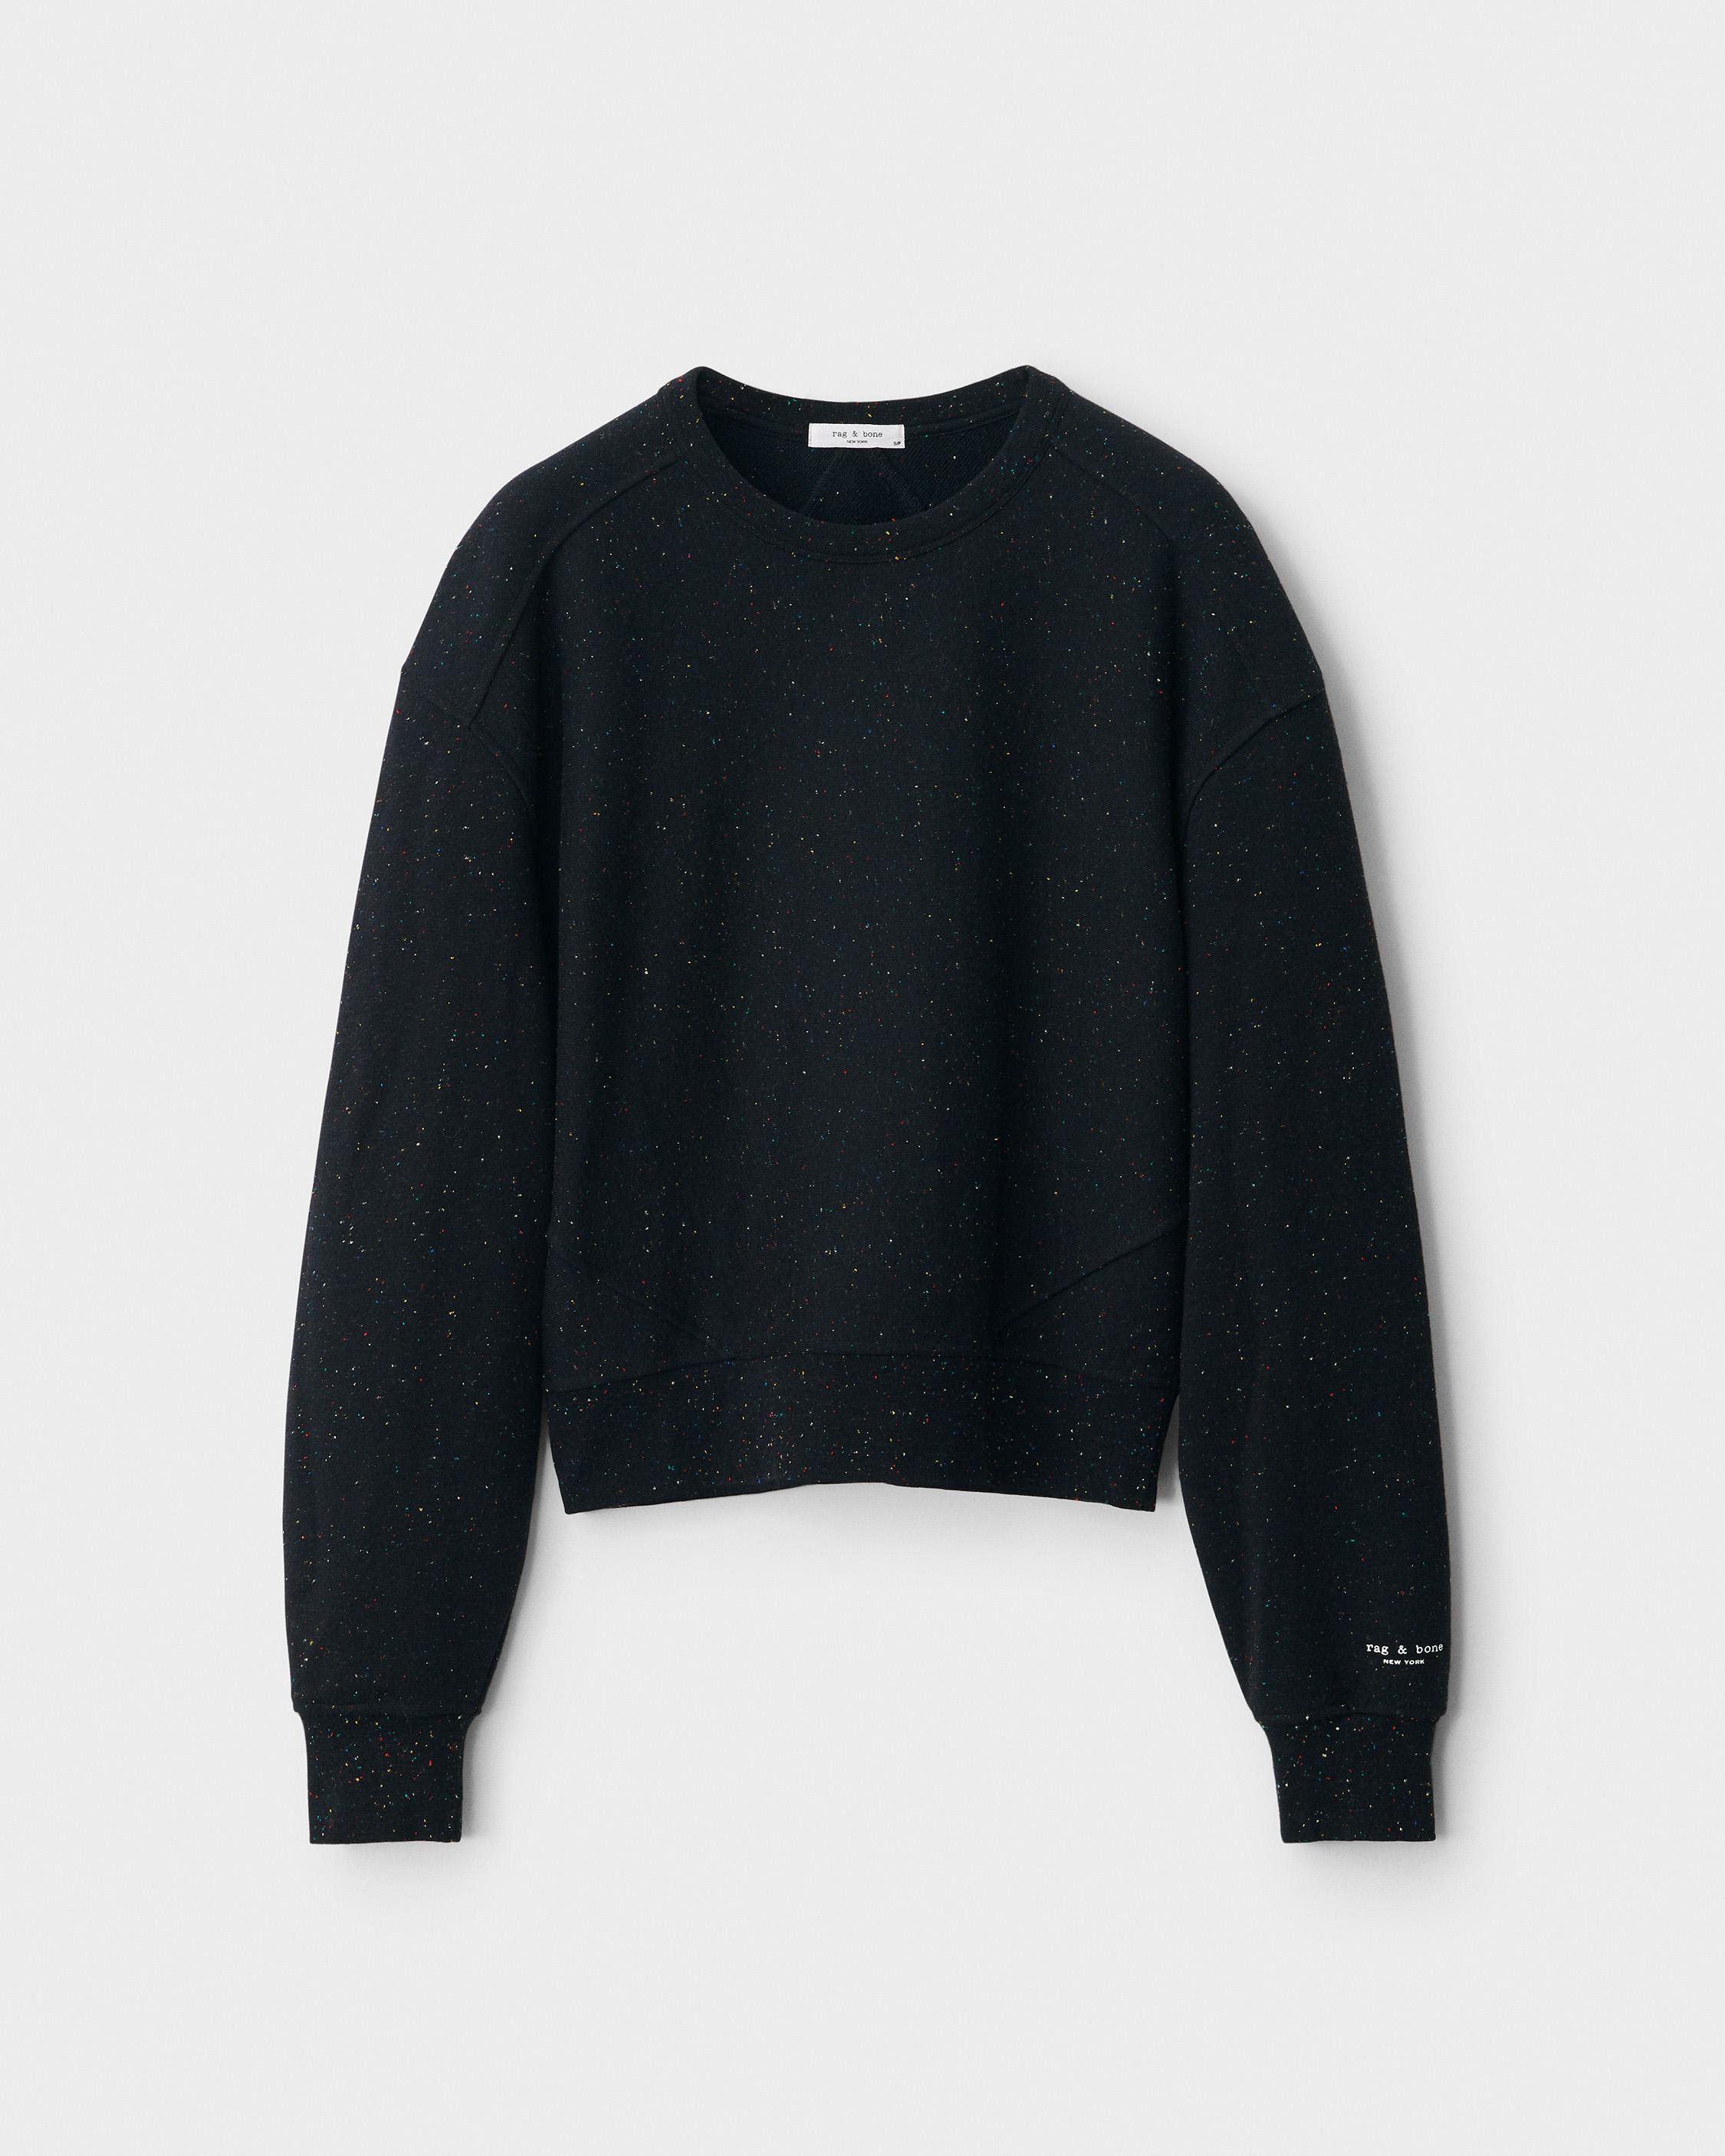 Pullovers & Sweatshirts for Women | rag & bone